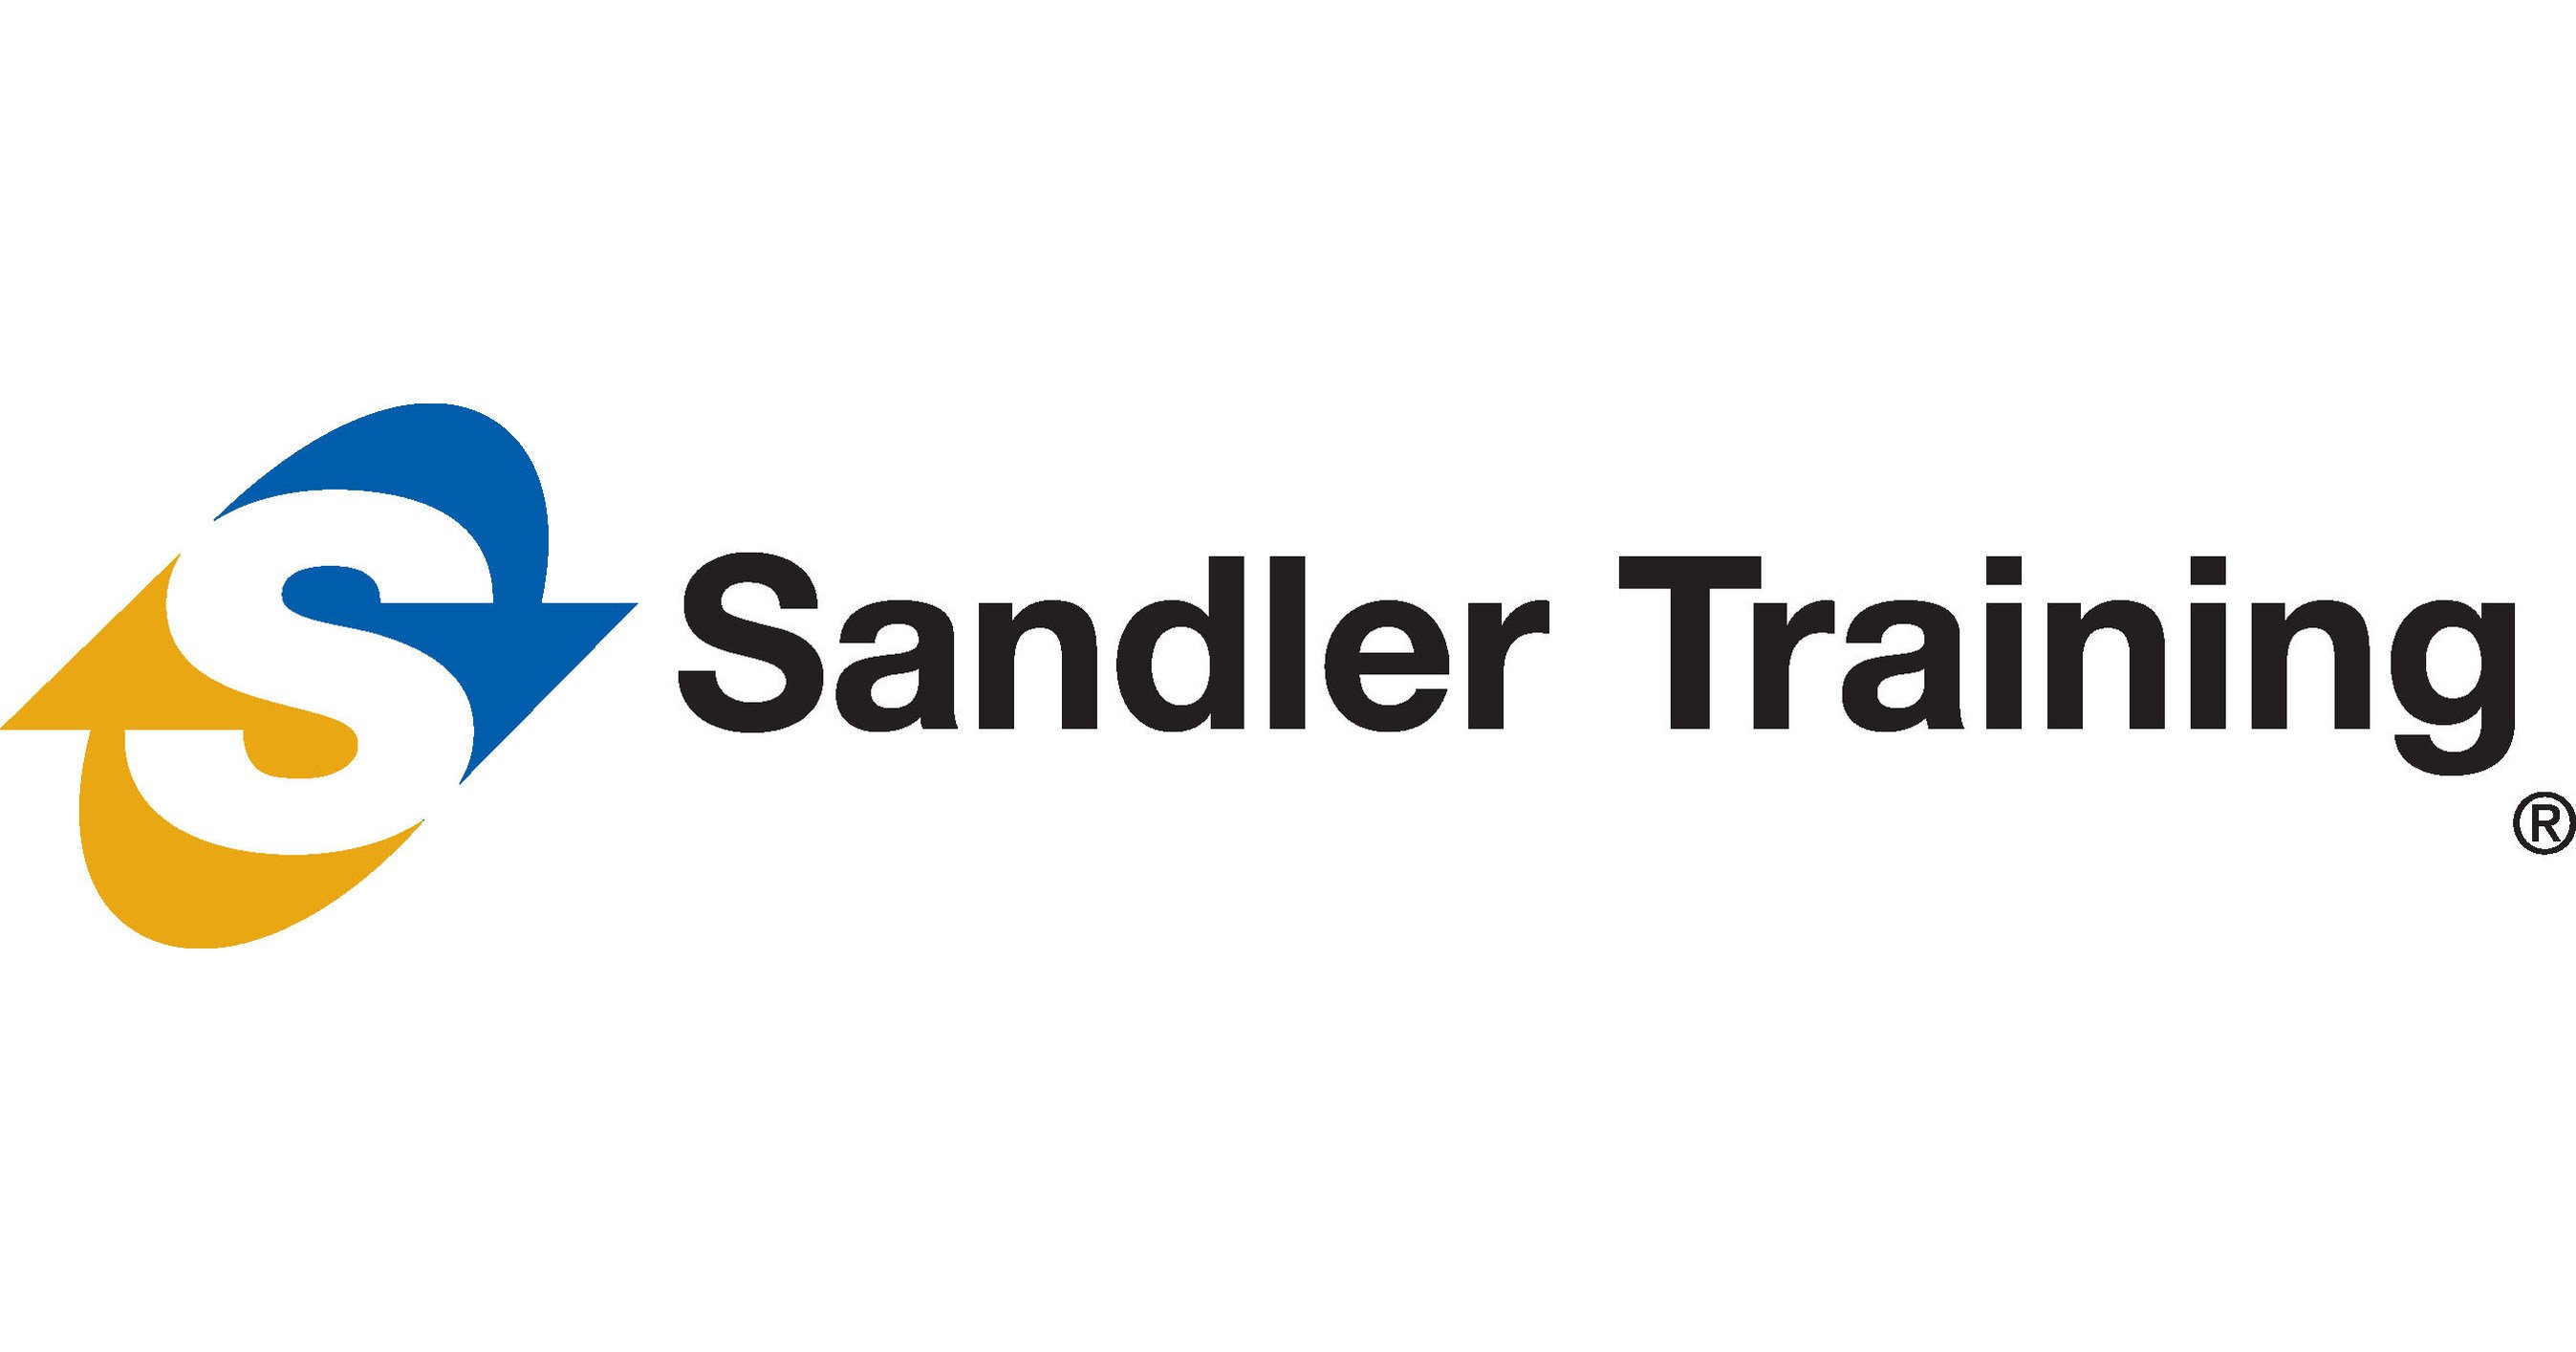 Sandler training logo